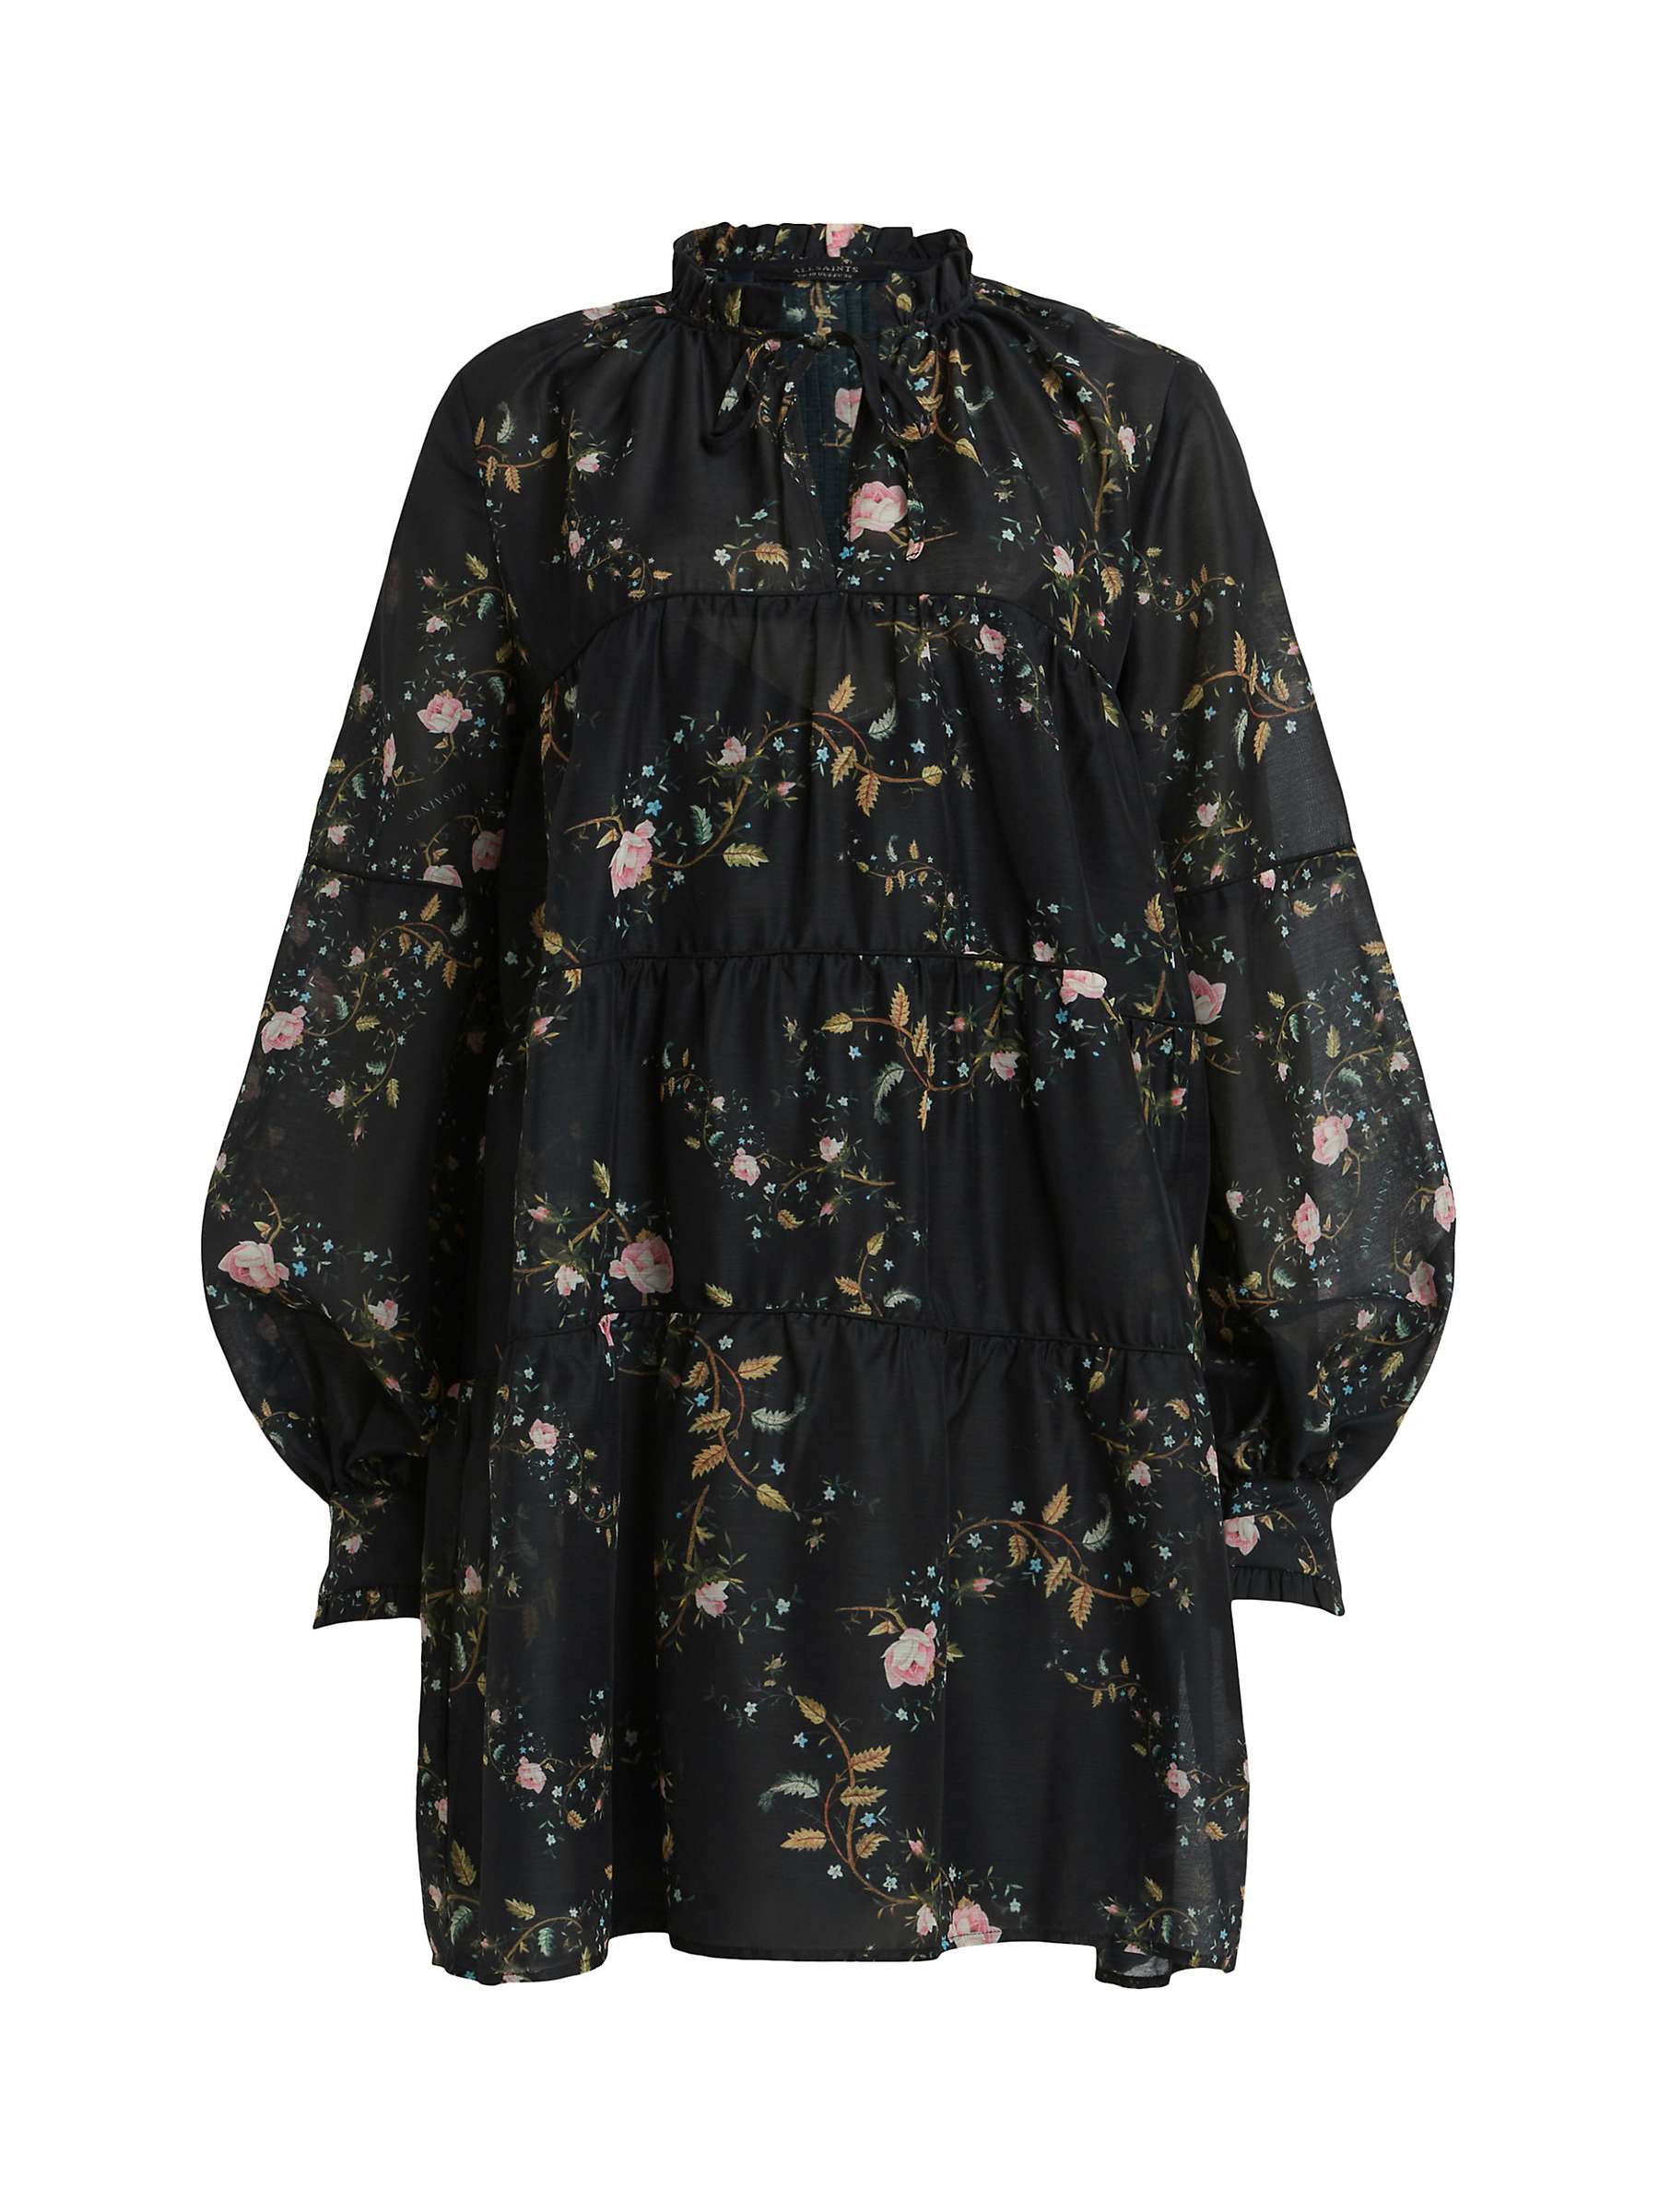 Buy AllSaints Mindy Oto Mini Dress, Black Online at johnlewis.com